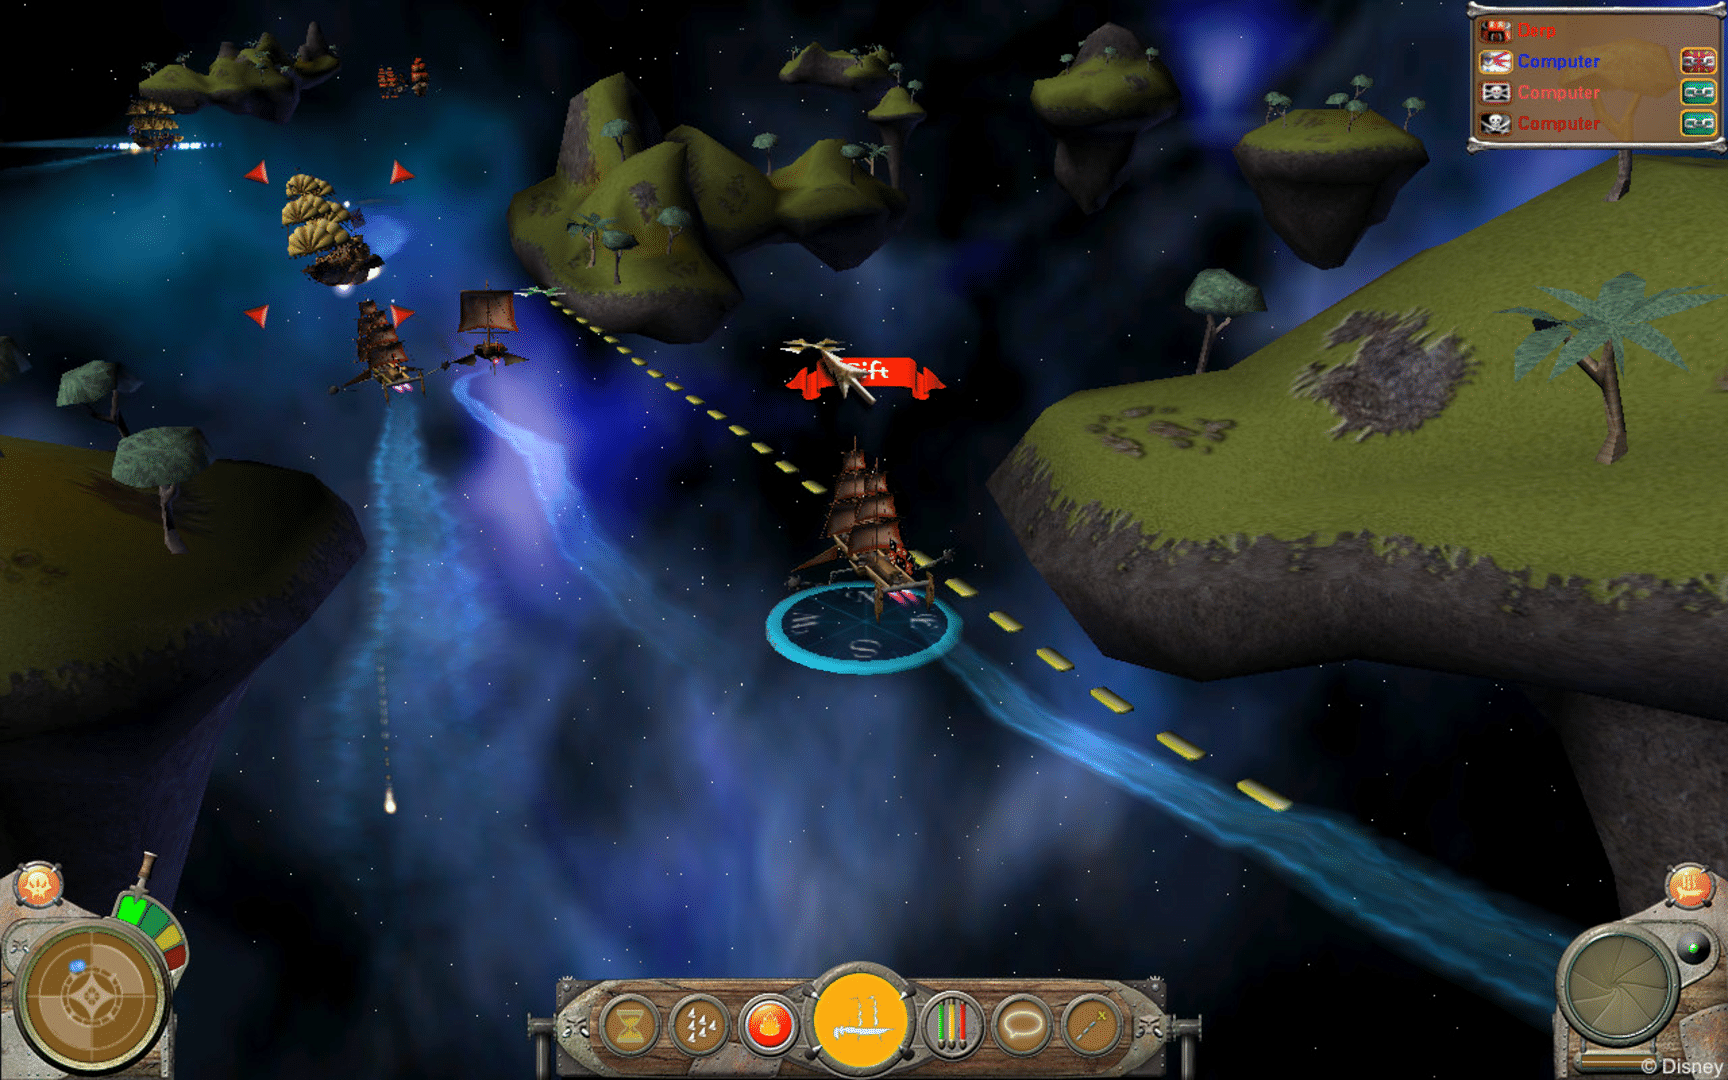 Disney's Treasure Planet: Battle at Procyon screenshot